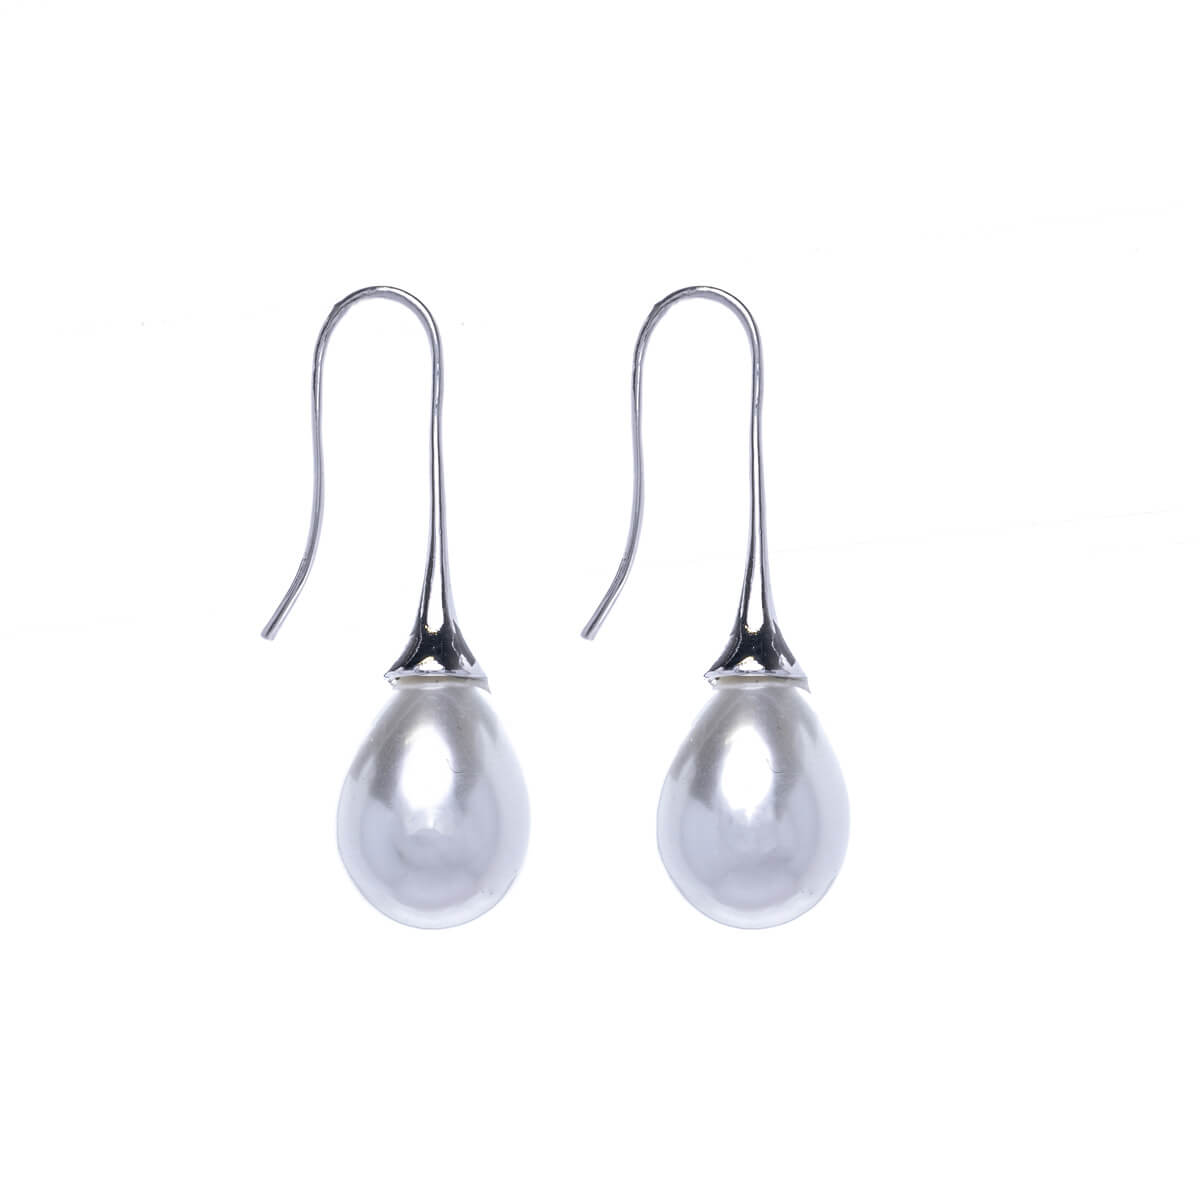 Hanging teardrop shaped pearl earrings